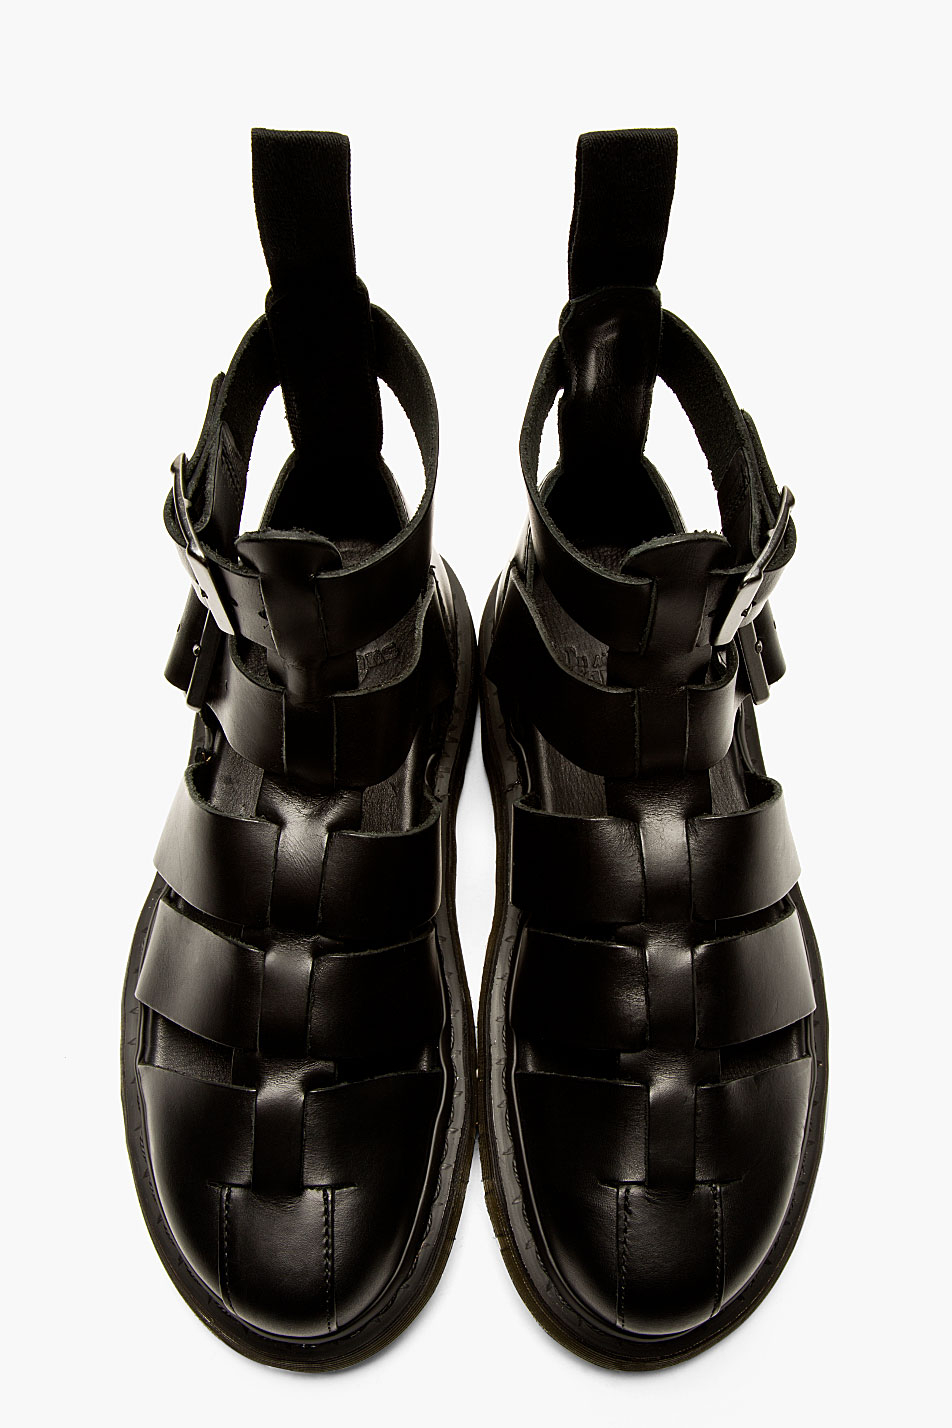 Dr. Martens Smooth Leather Gladiator Sandals in Black for Men - Lyst